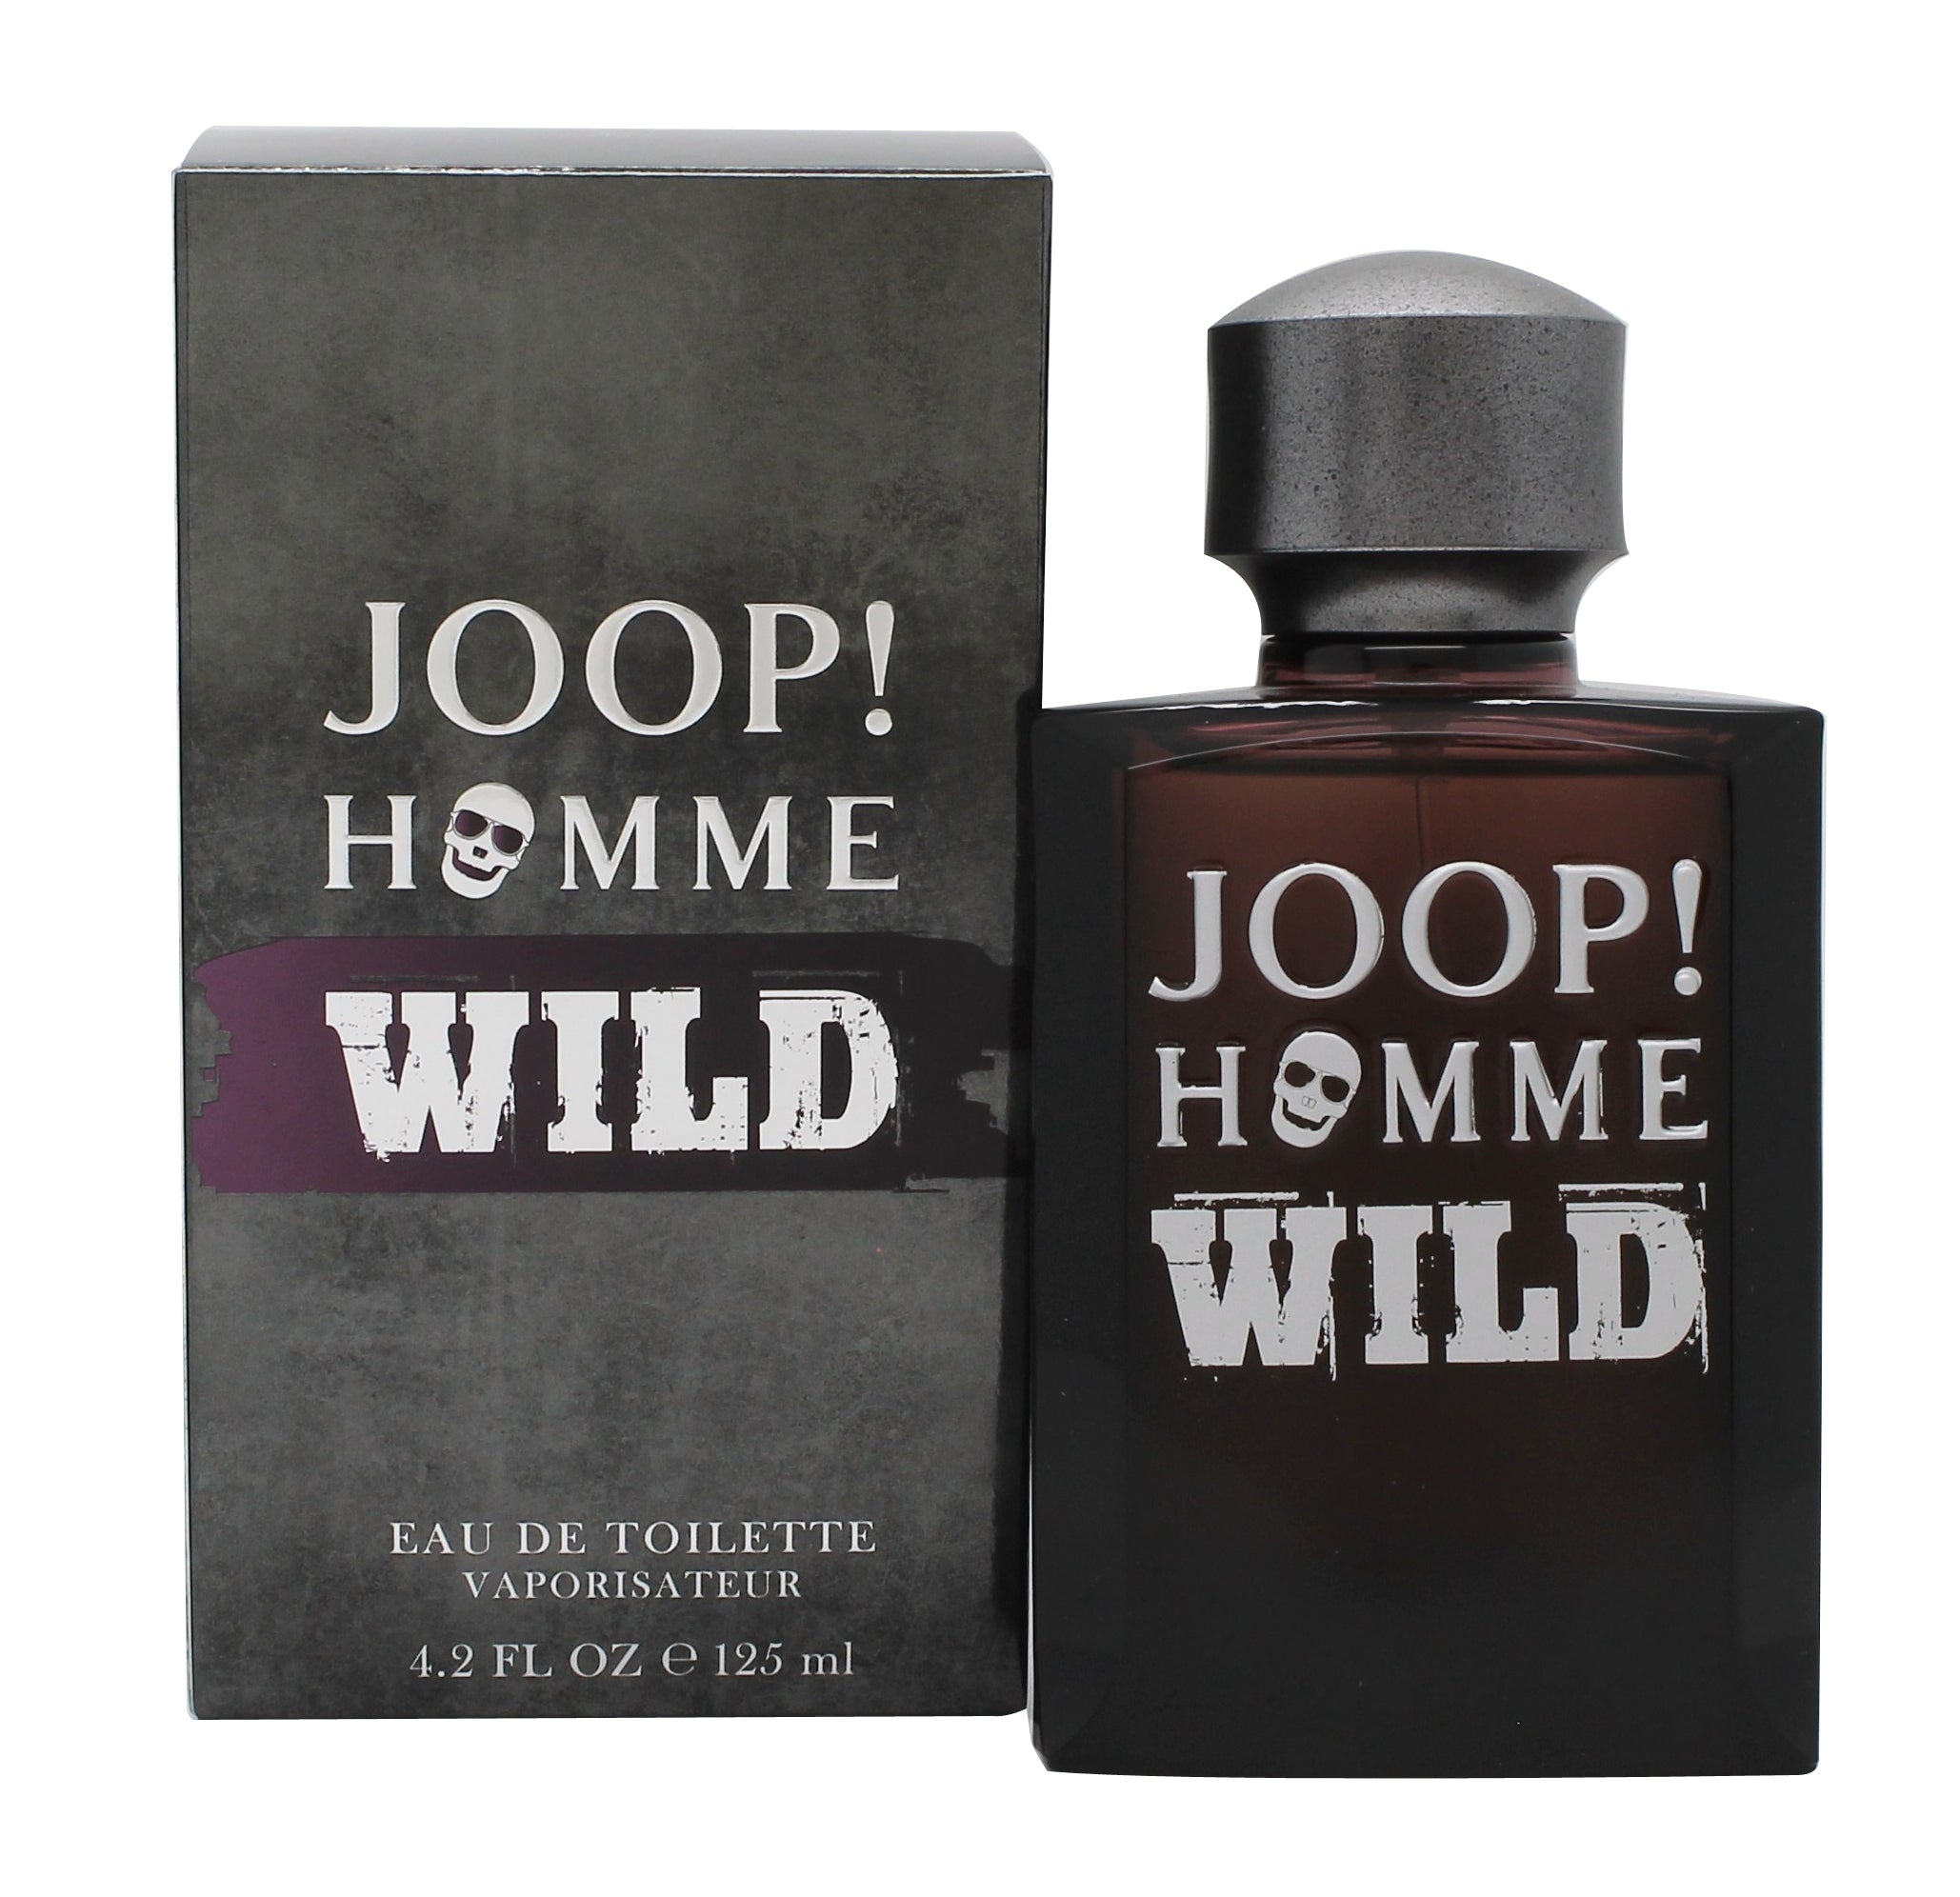 View Joop Homme Wild Eau de Toilette 125ml Spray information